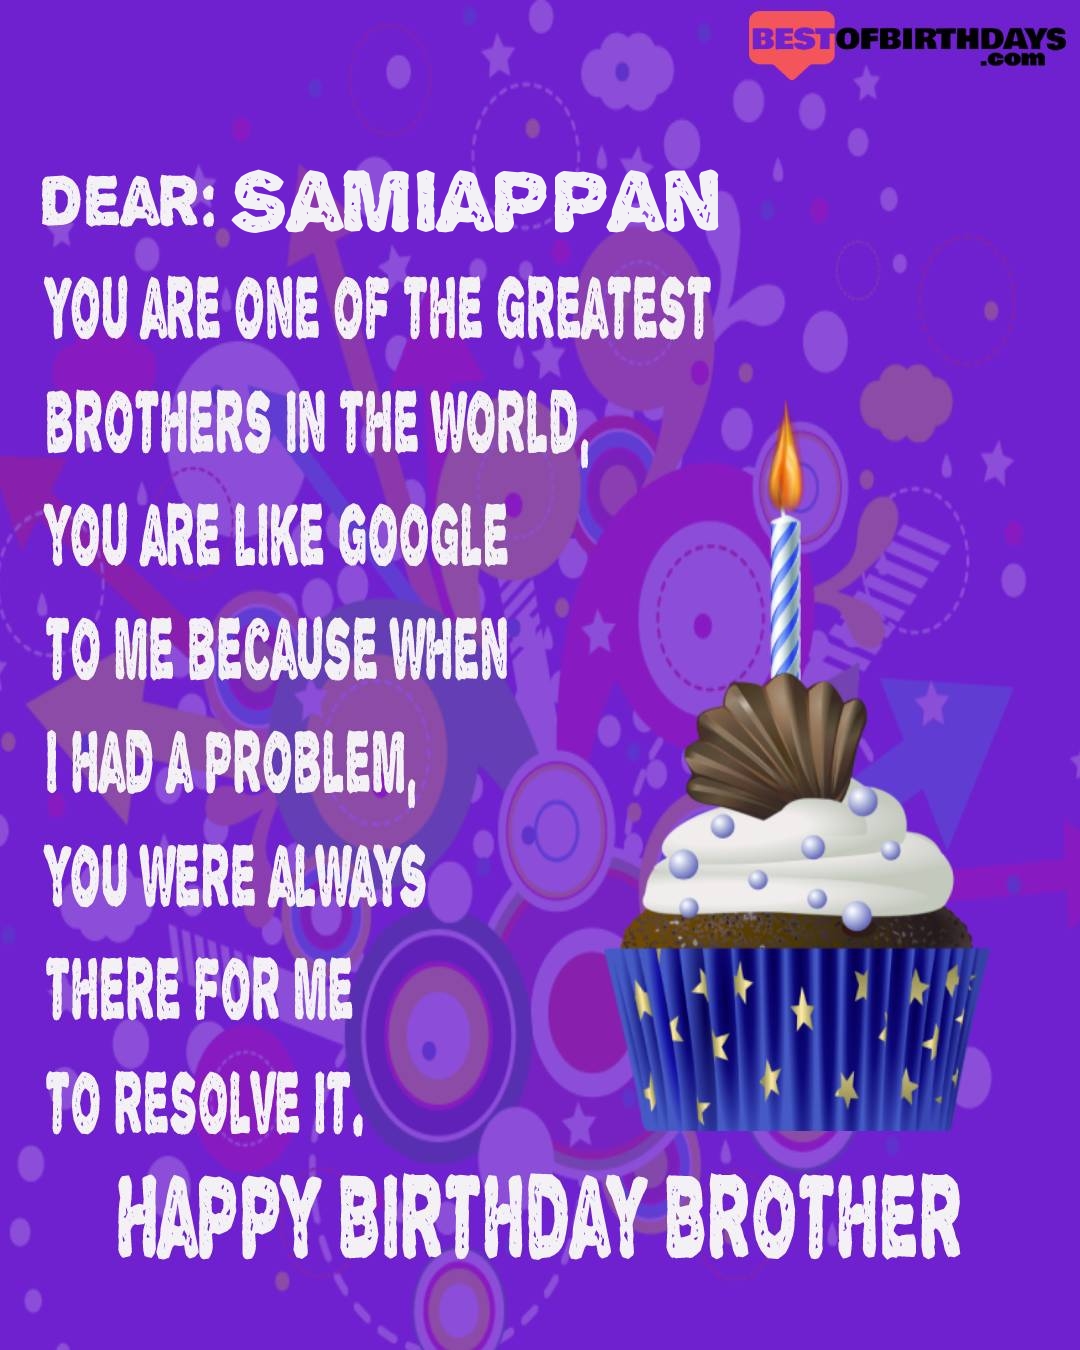 Happy birthday samiappan bhai brother bro